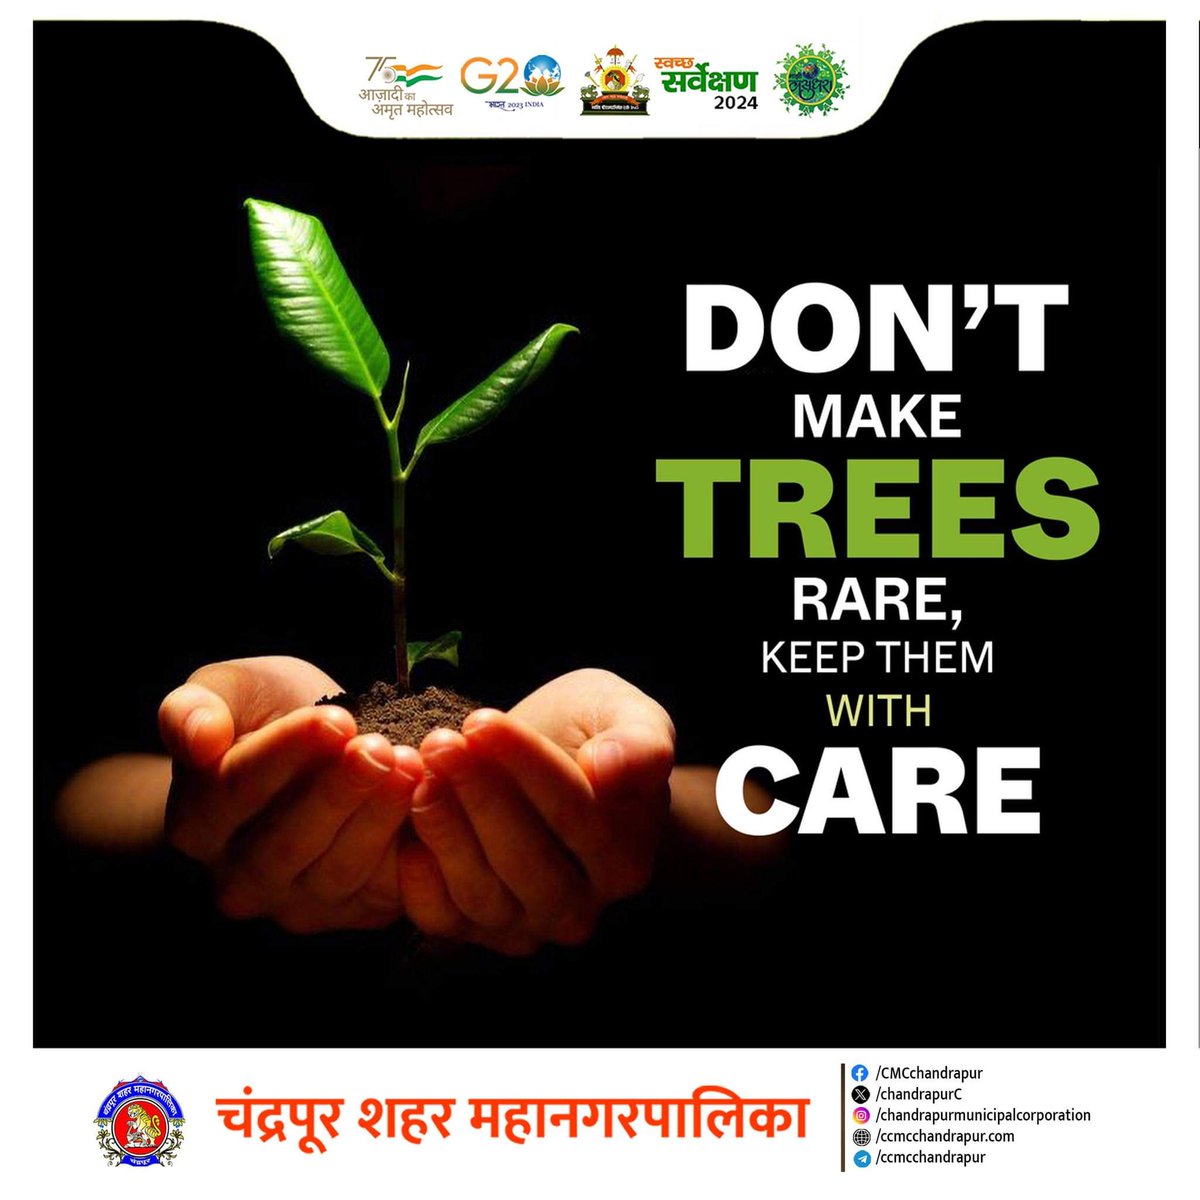 Don’t make trees rare, keep them with care
#SwachhSurvekshan2023 #SwachhataKeDoRang #MyCityMyPride  #GoGreen #YehMeraSheharHai #IndiavsGarbage #MissionLiFE #ChooseLiFE #माझीवसुंधरा